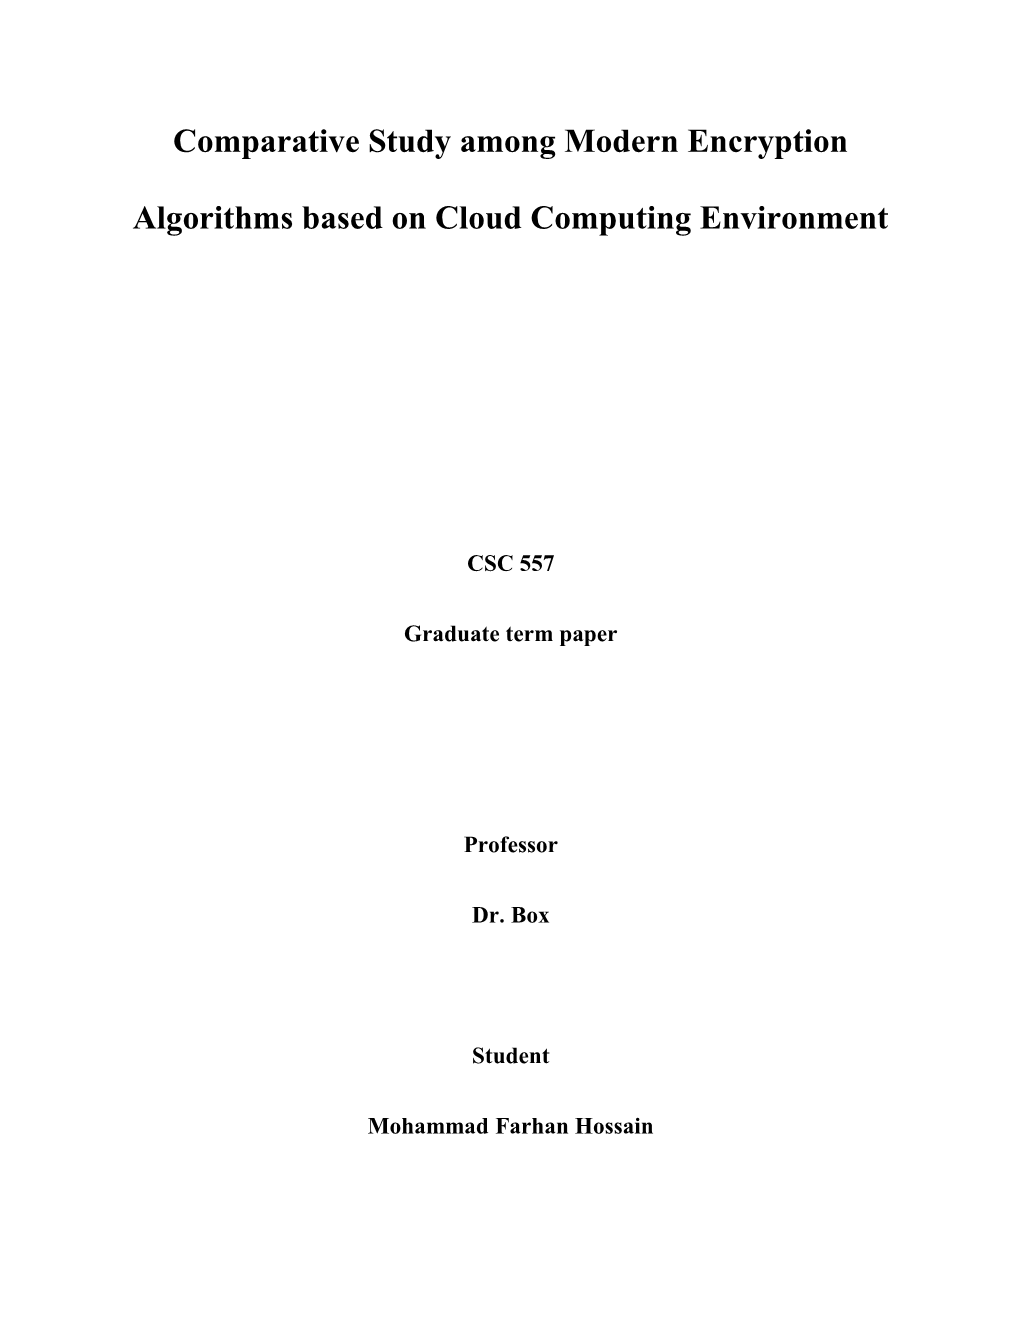 Comparative Study Among Modern Encryption Algorithms Based on Cloud Computing Environment